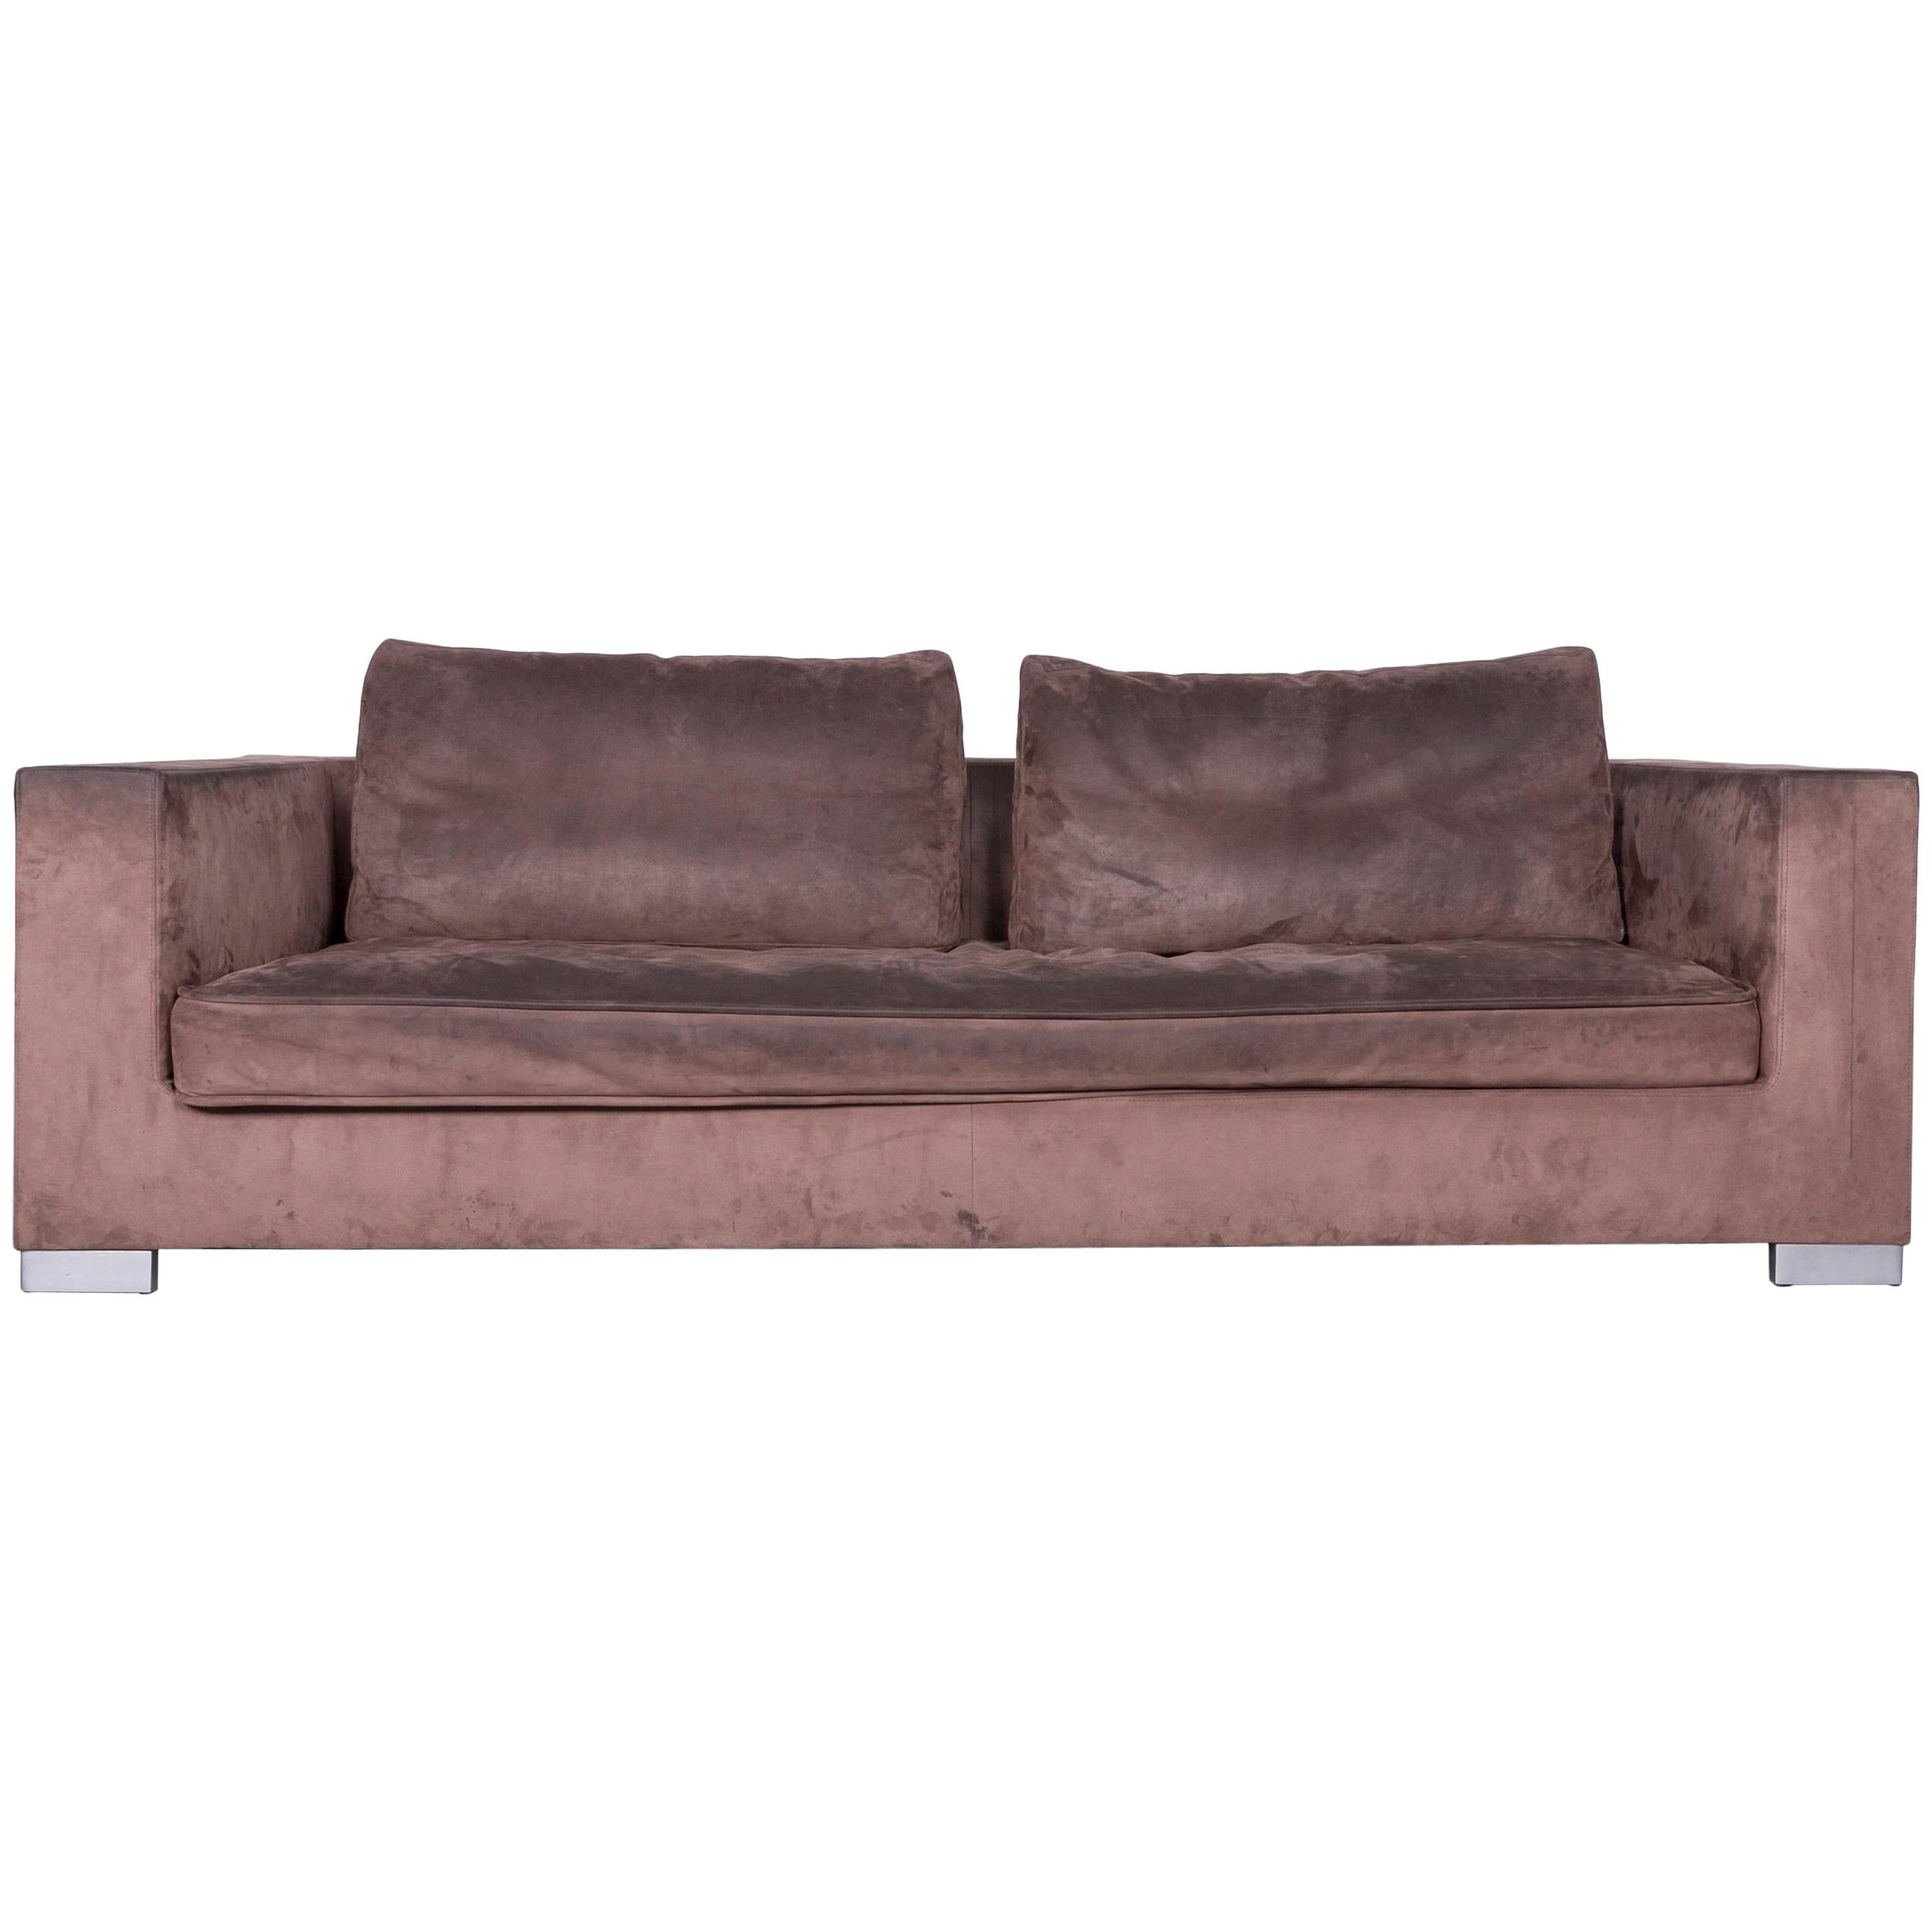 Ligne Roset Rive Gauche Designer Fabric Sofa Brown Two-Seat Couch